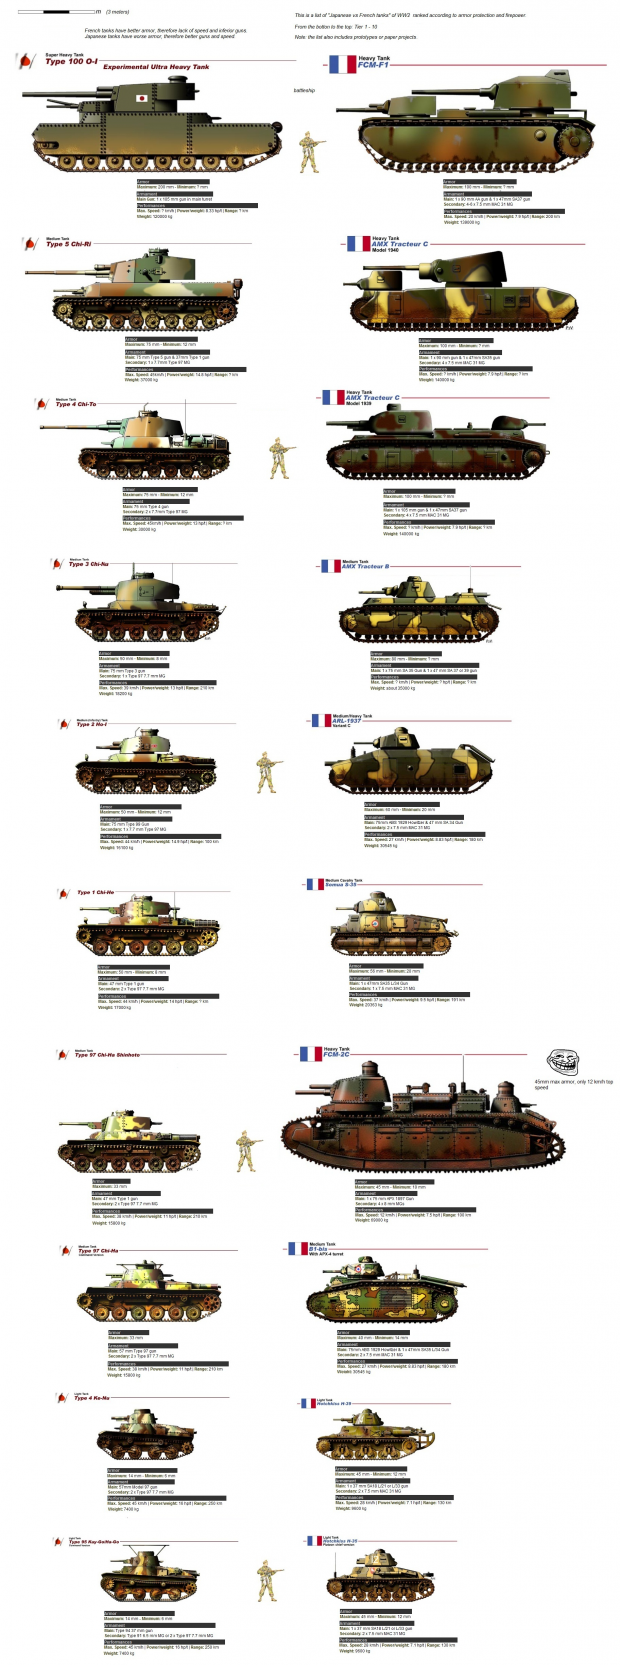 Tank tier/ranking list of Allies: France & Japan